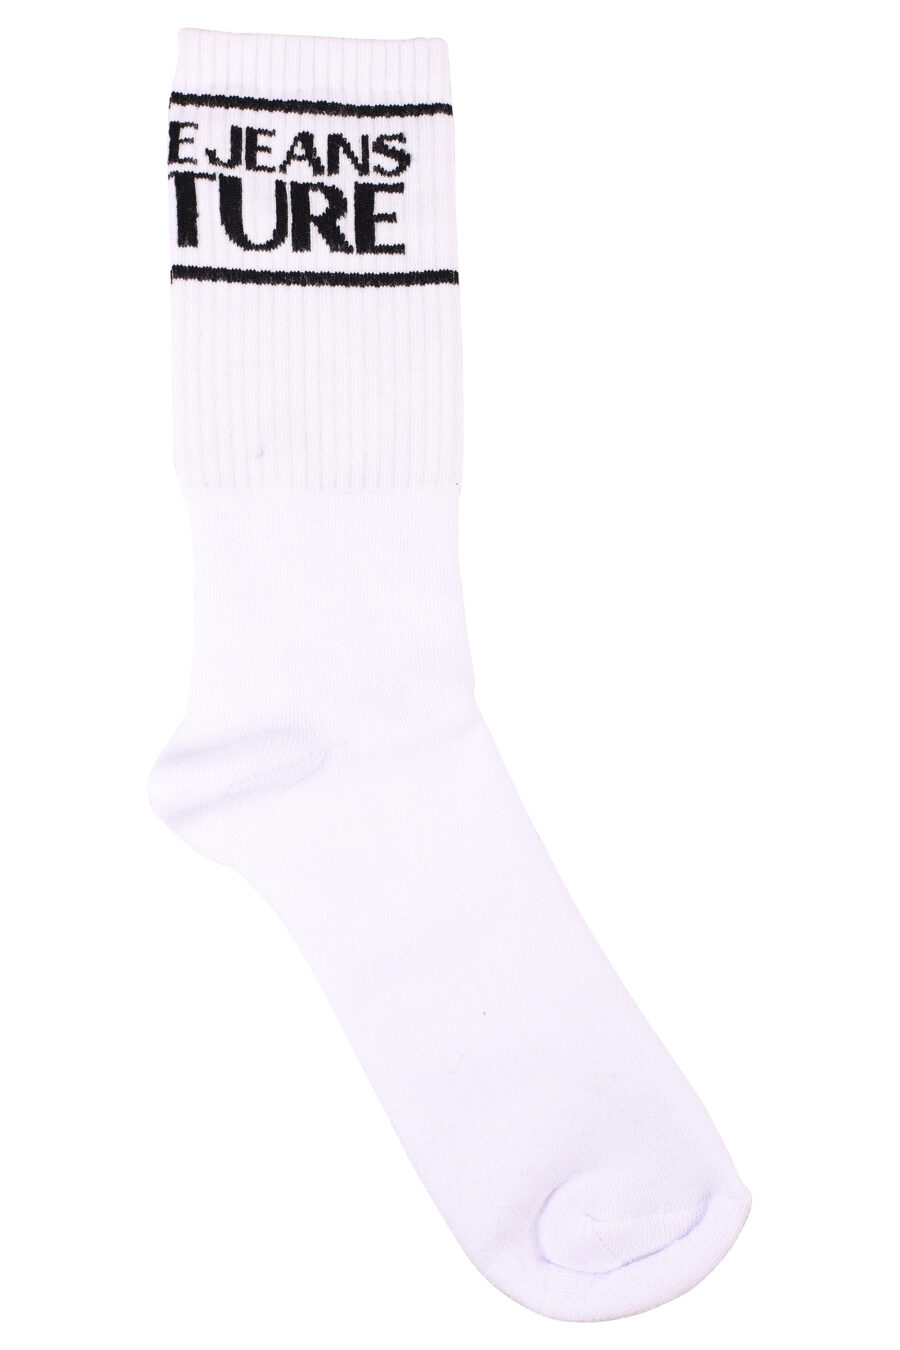 Calcetines blancos con logo horizontal negro - IMG 8541